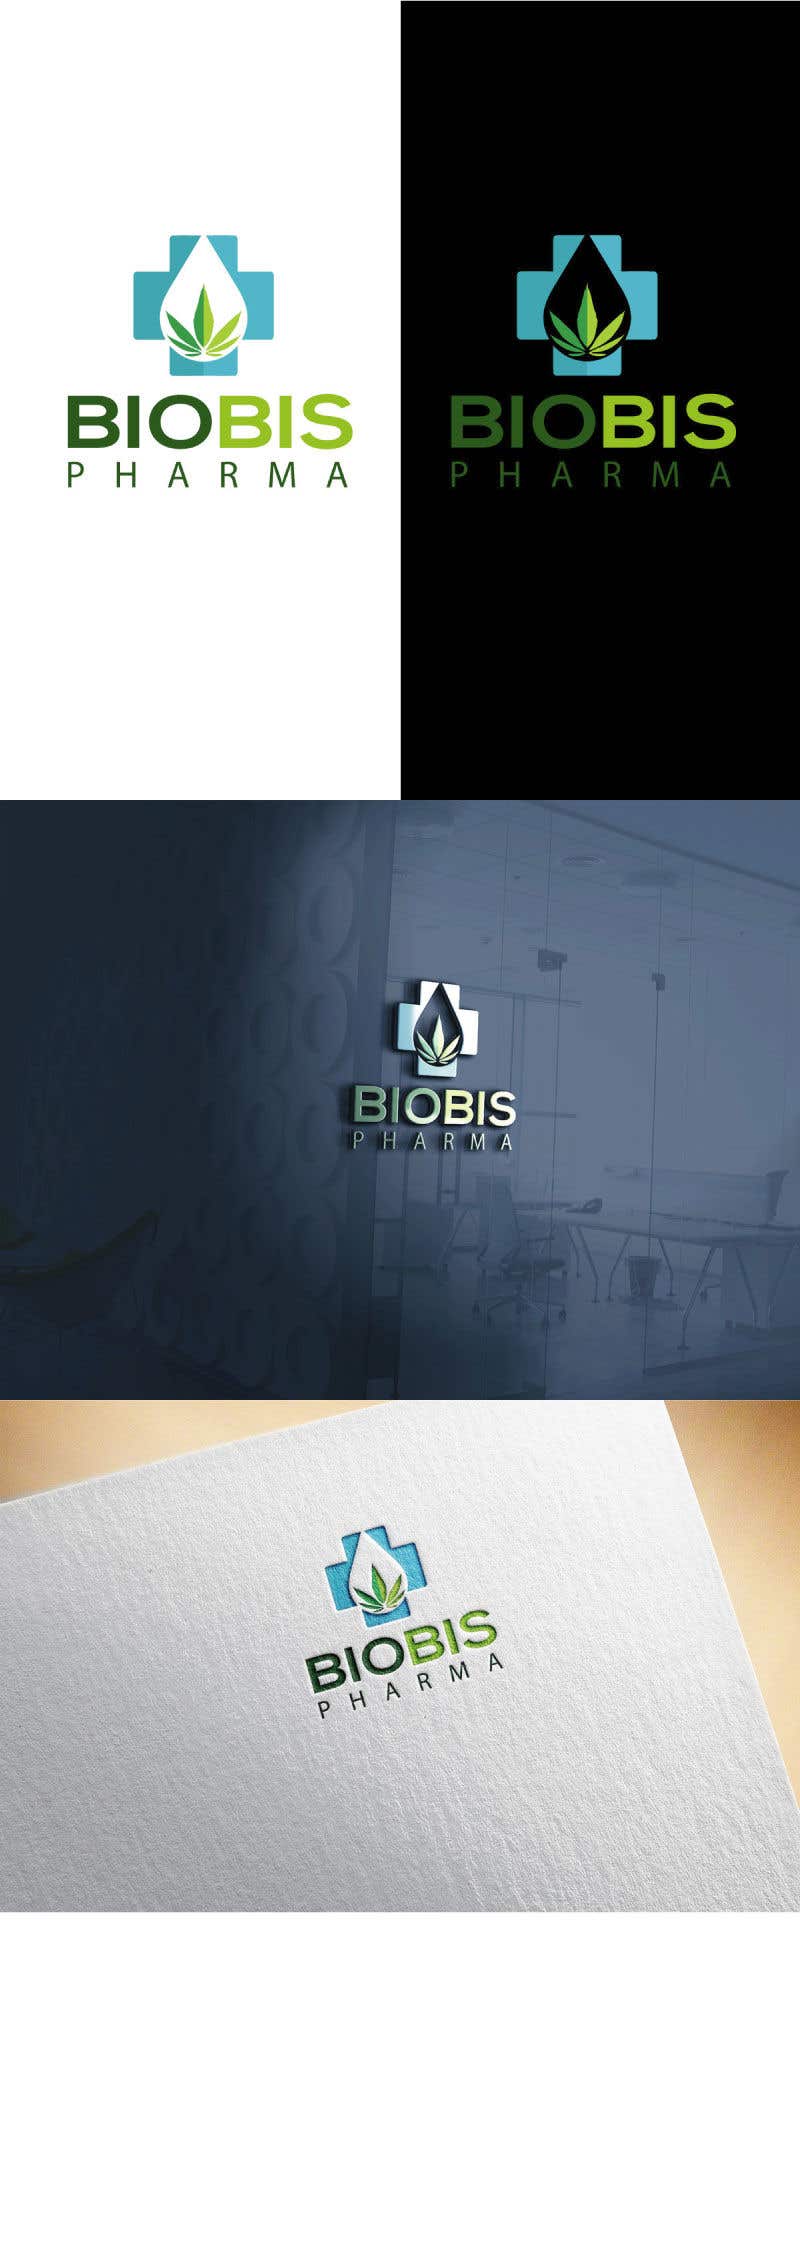 Kilpailutyö #94 kilpailussa                                                 Design a Logo - Biobis Pharma
                                            